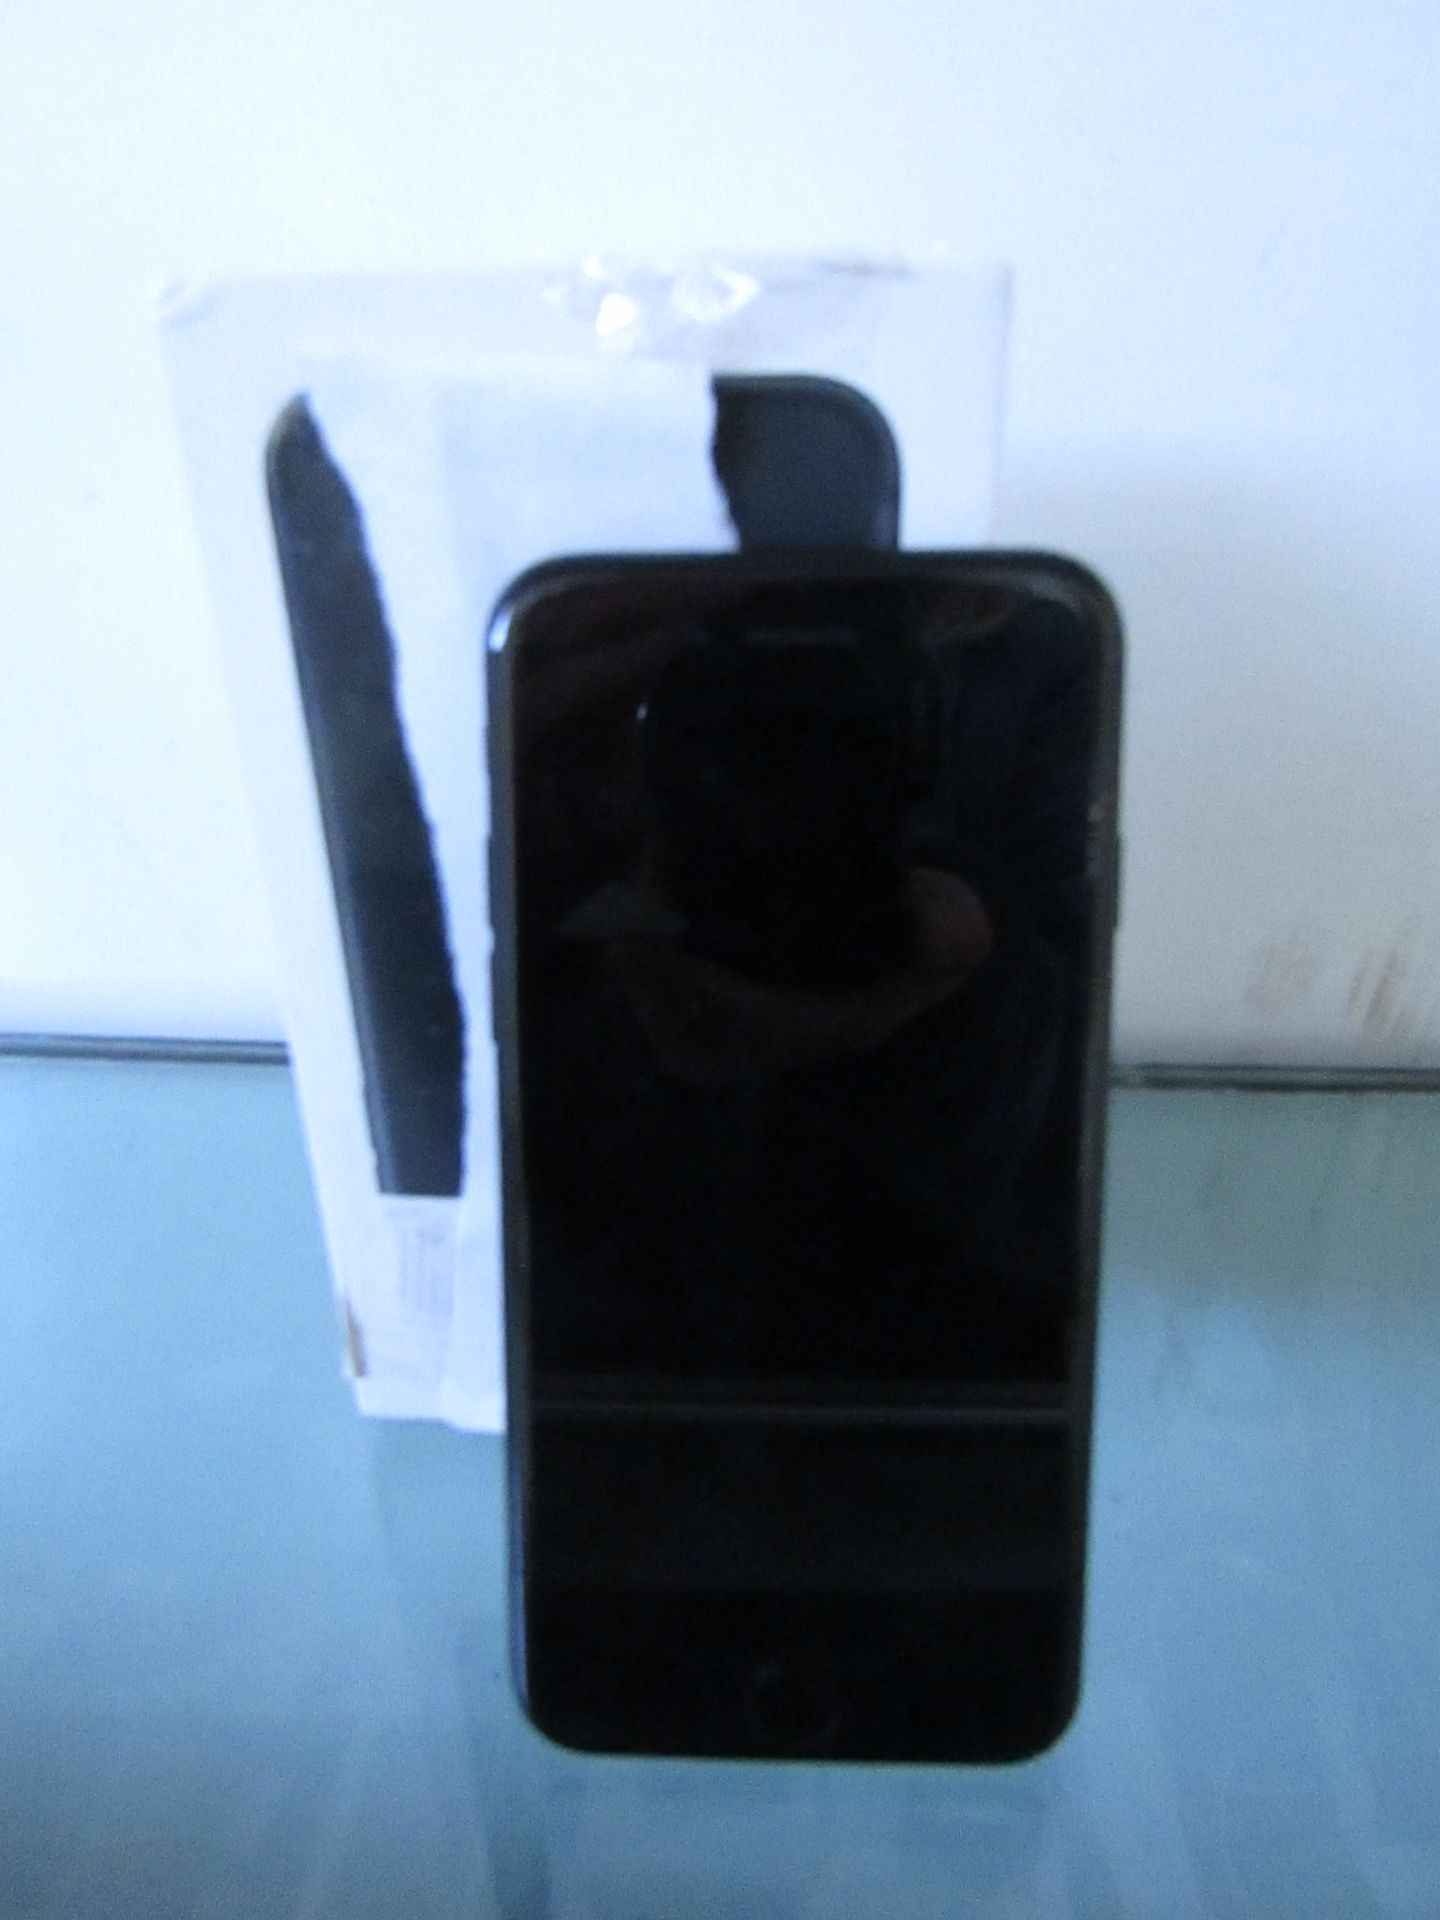 Apple iPhone 7 256GB, no power, with original box